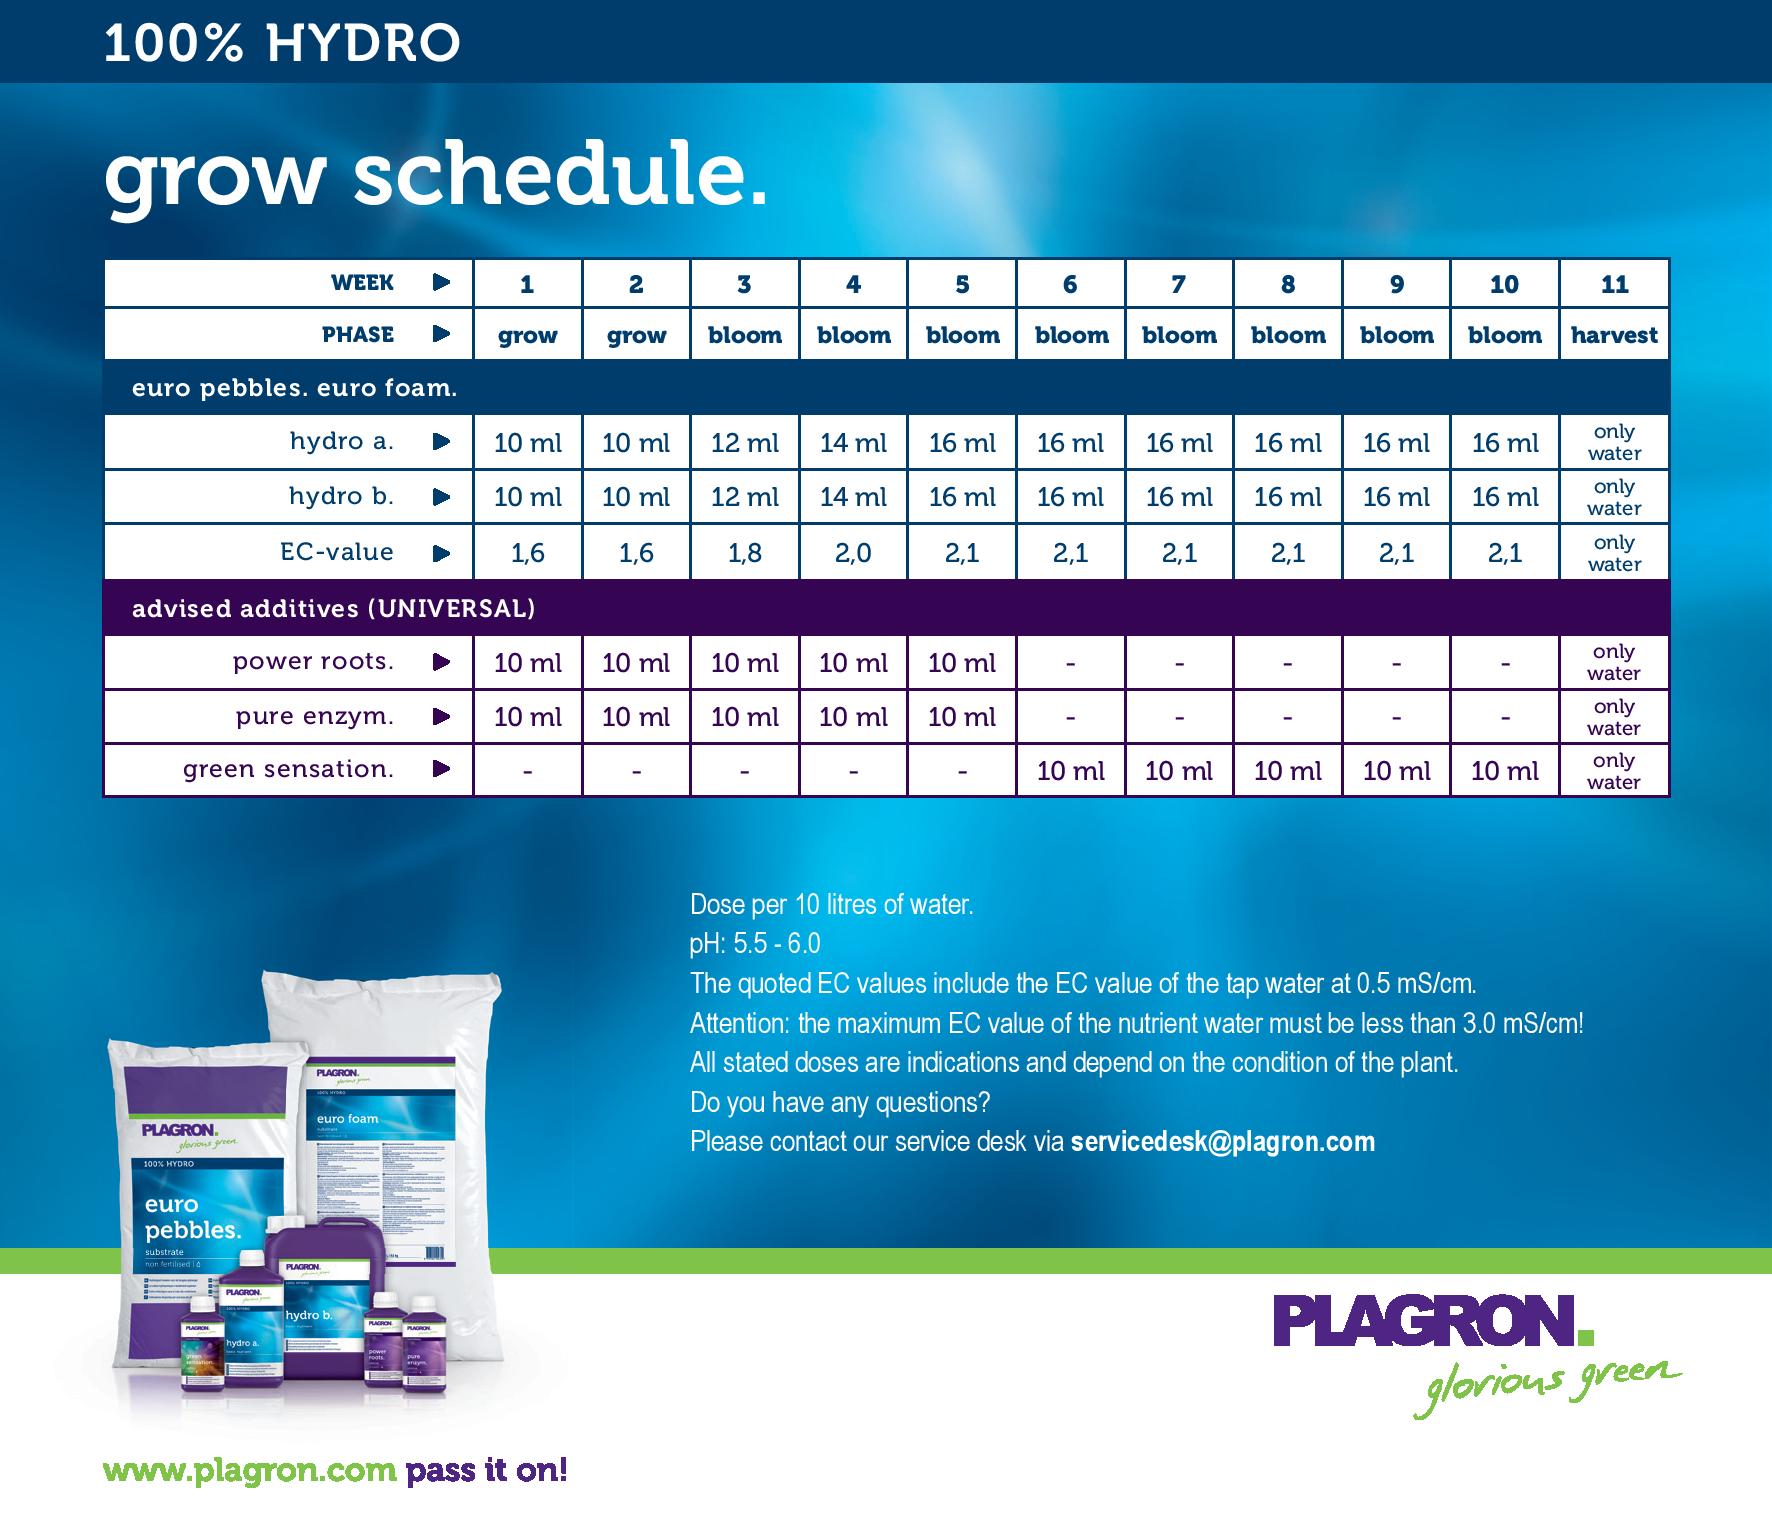 Feeding schedule for Plagron 100% Hydro